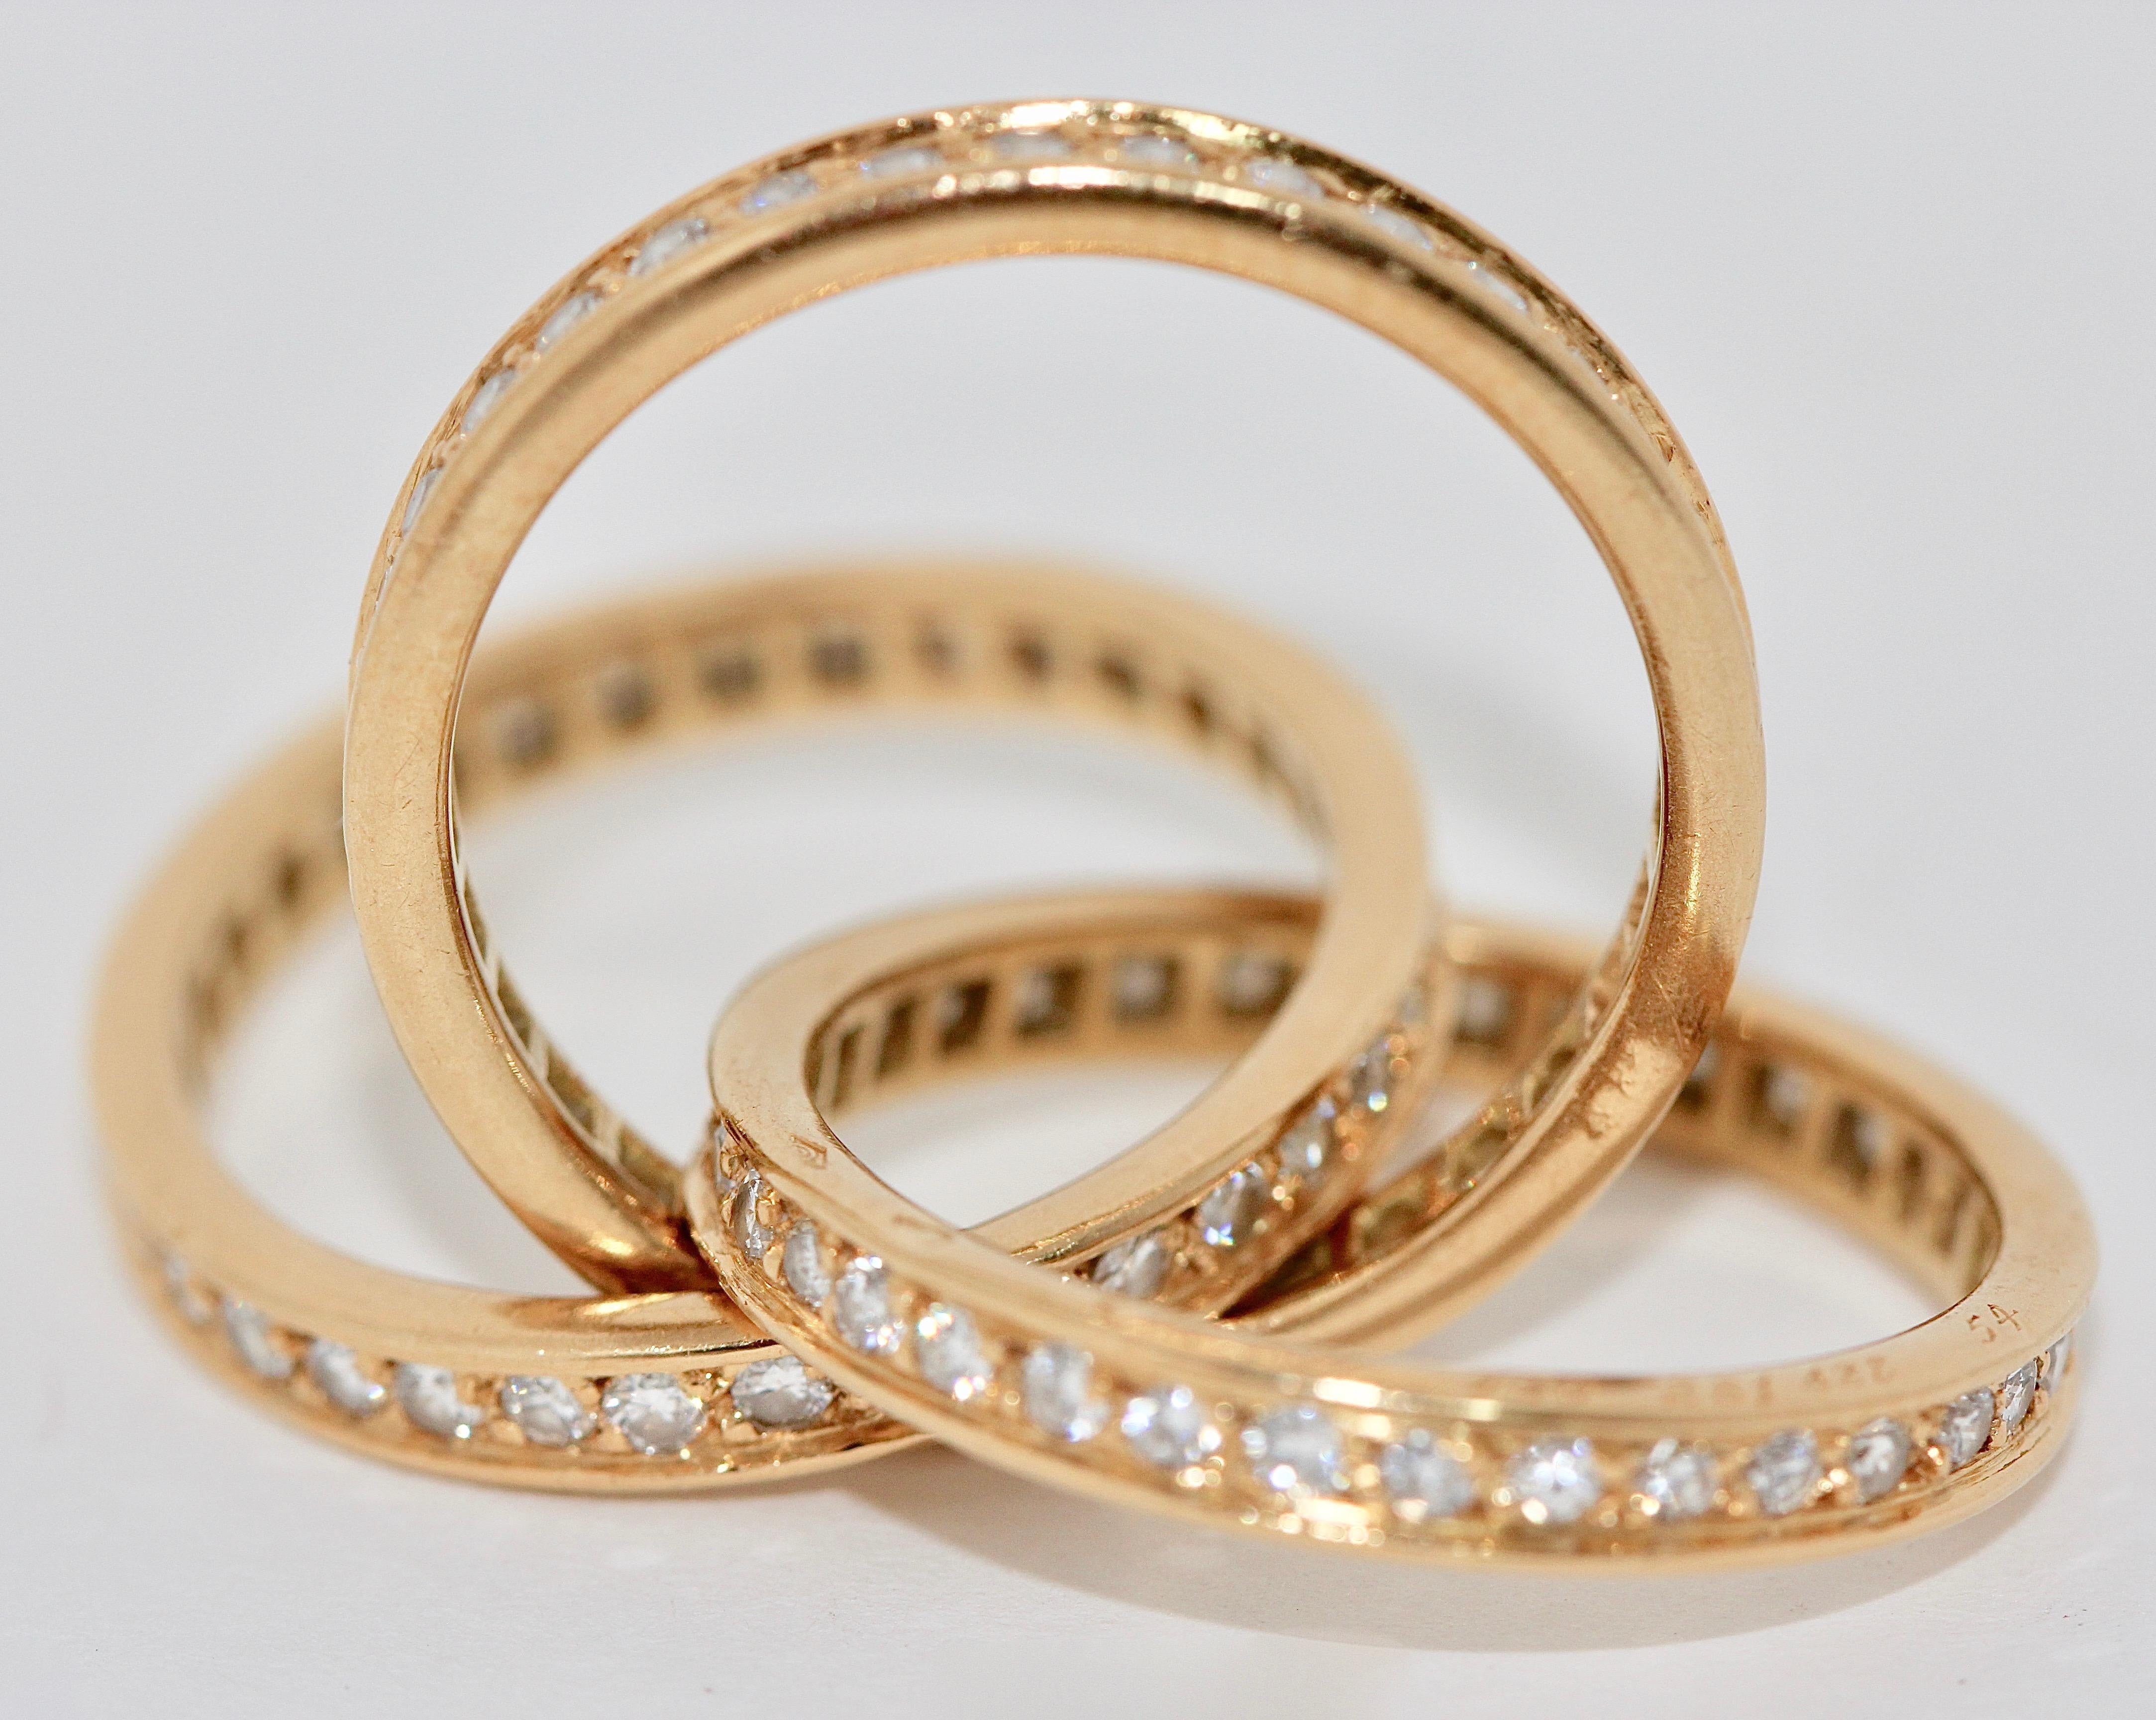 Cartier Diamond Trinity Ring, 18K Gold

Ring size 54 (US 6.8)